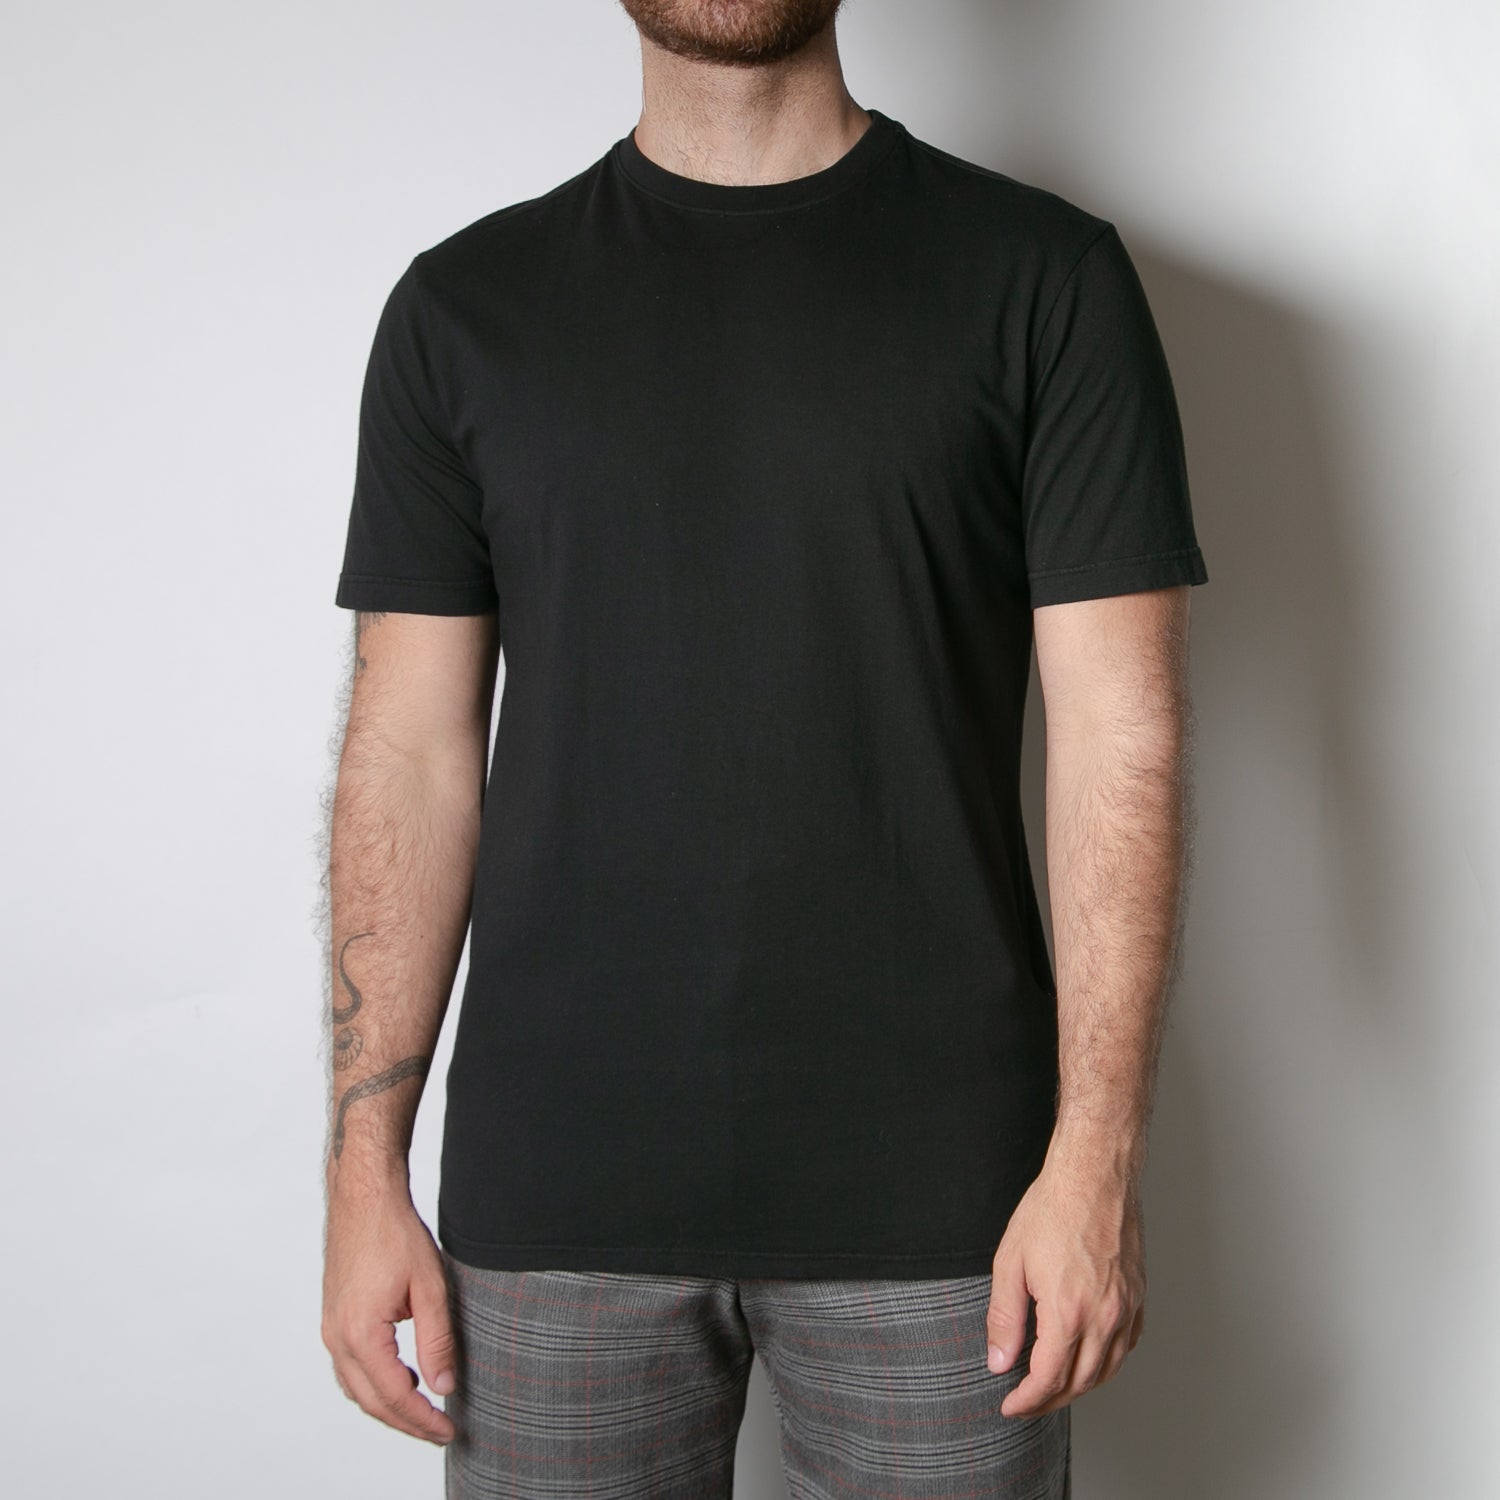 basic men's organic cotton black t-shirt by Secret Location